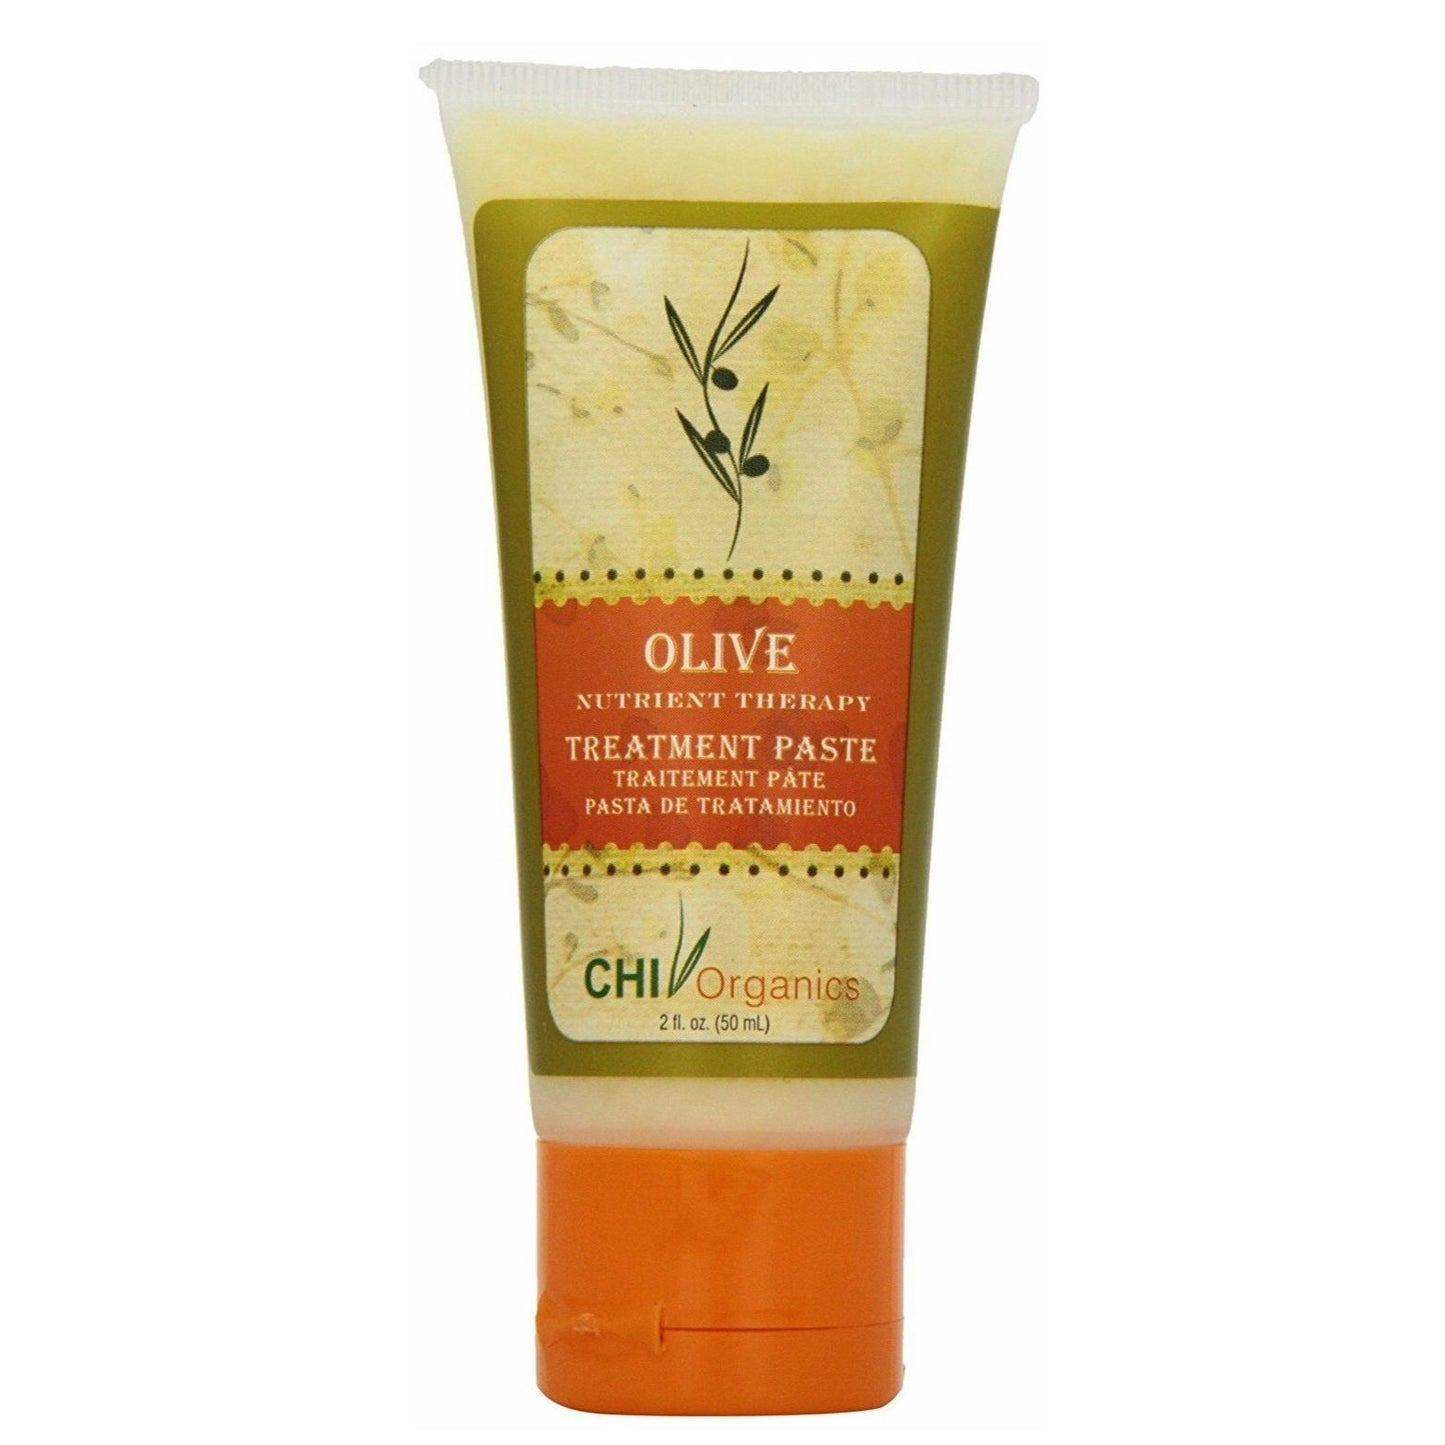 CHI Organics Olive Treatment Paste